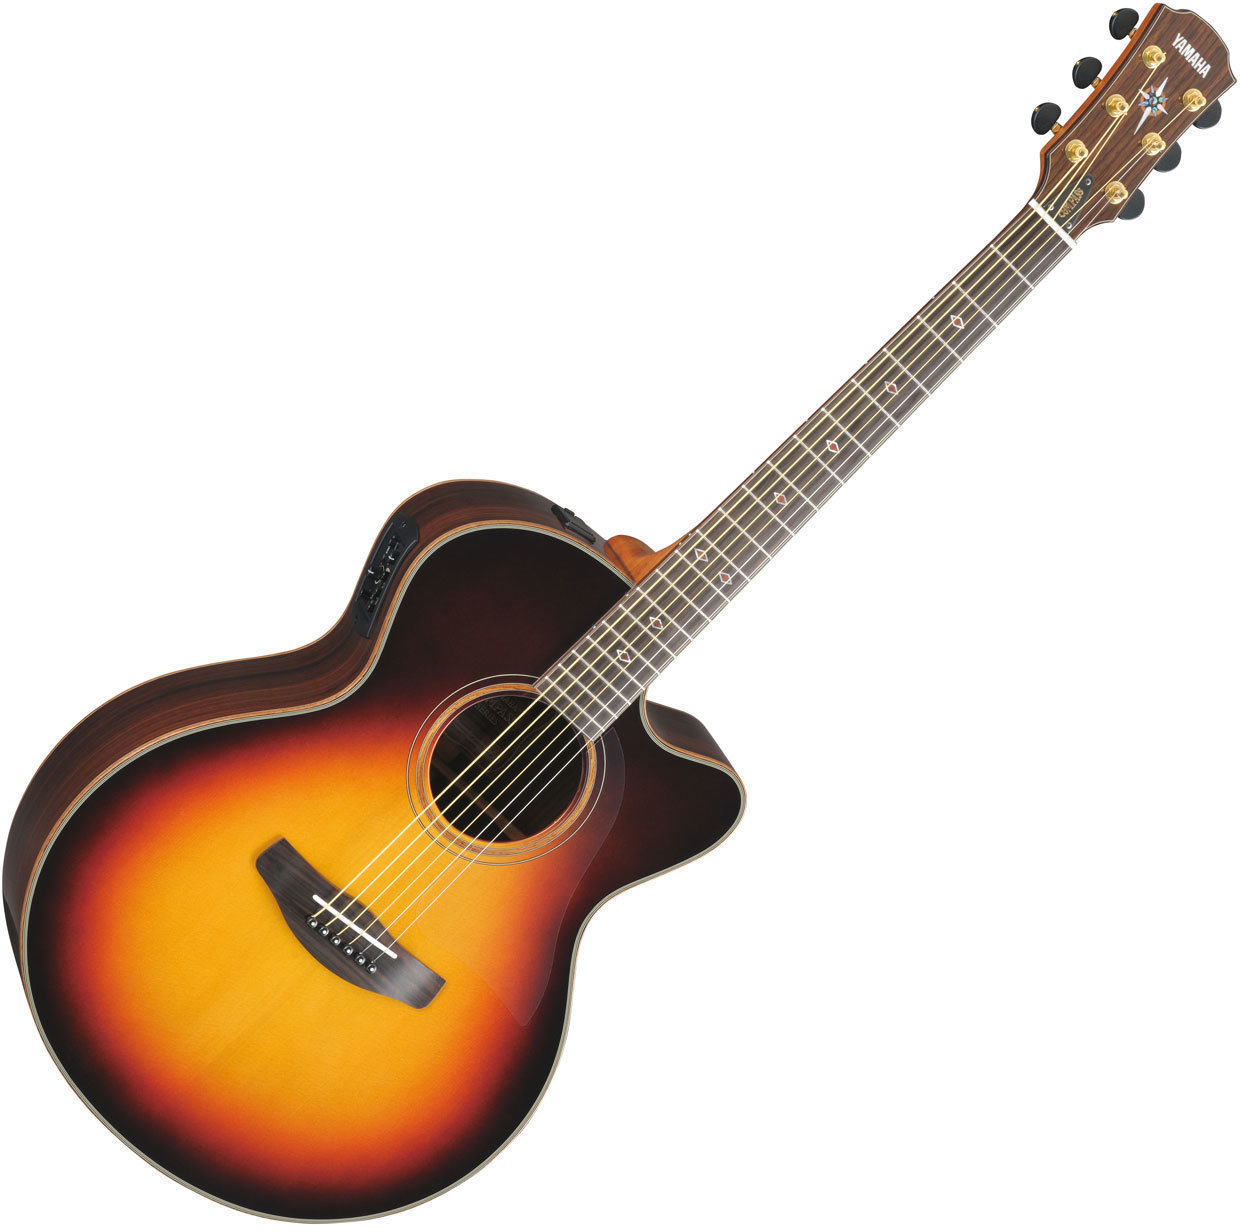 Jumbo elektro-akoestische gitaar Yamaha CPX1200II VS Vintage Sunburst